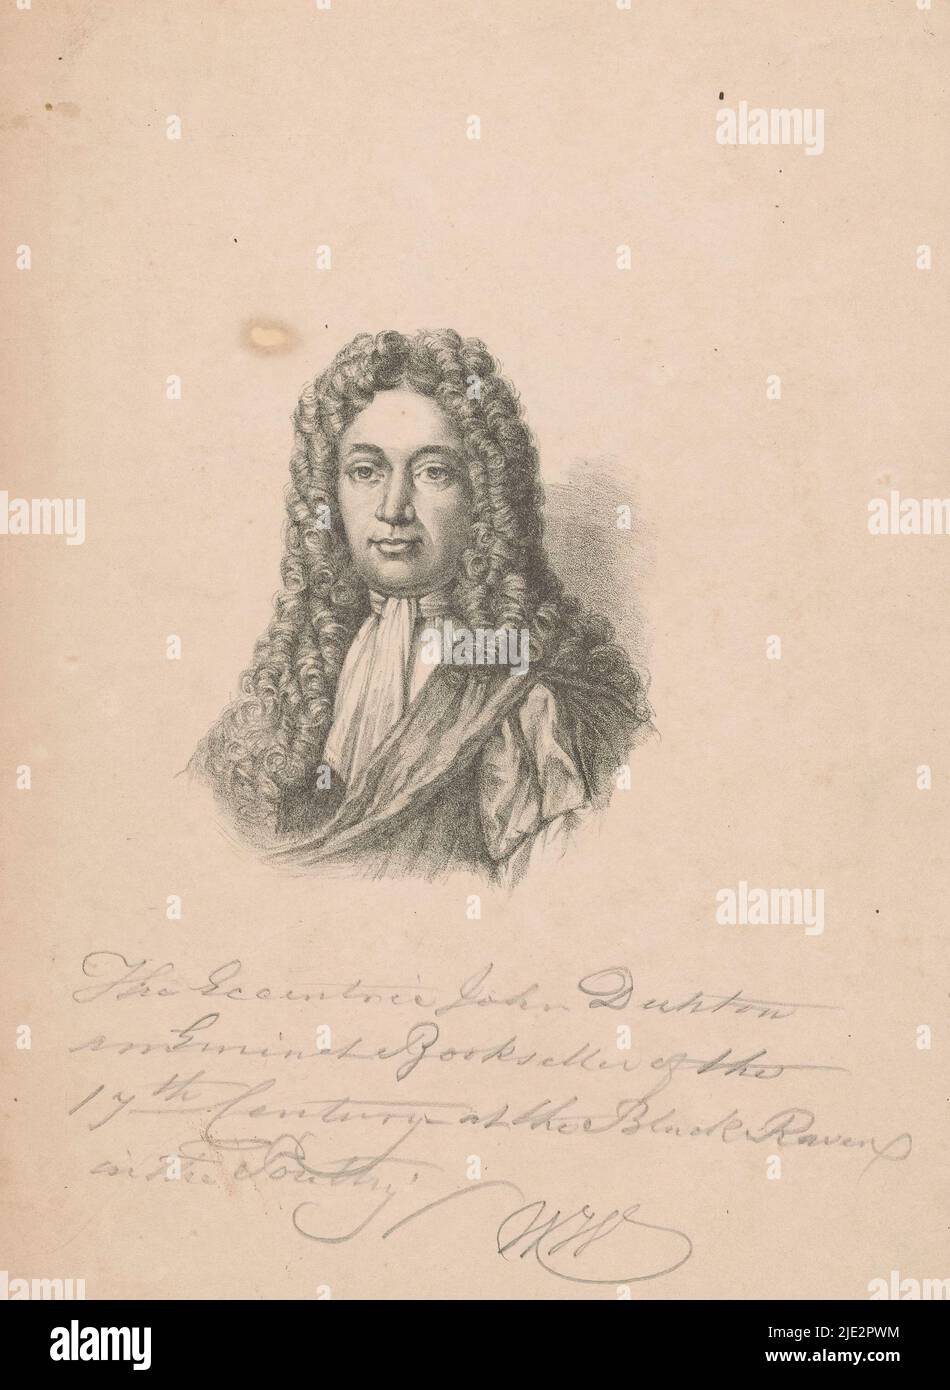 Portrait of John Dunton, bookseller in London, print maker: anonymous, c. 1825 - c. 1900, paper, height 226 mm × width 164 mm Stock Photo